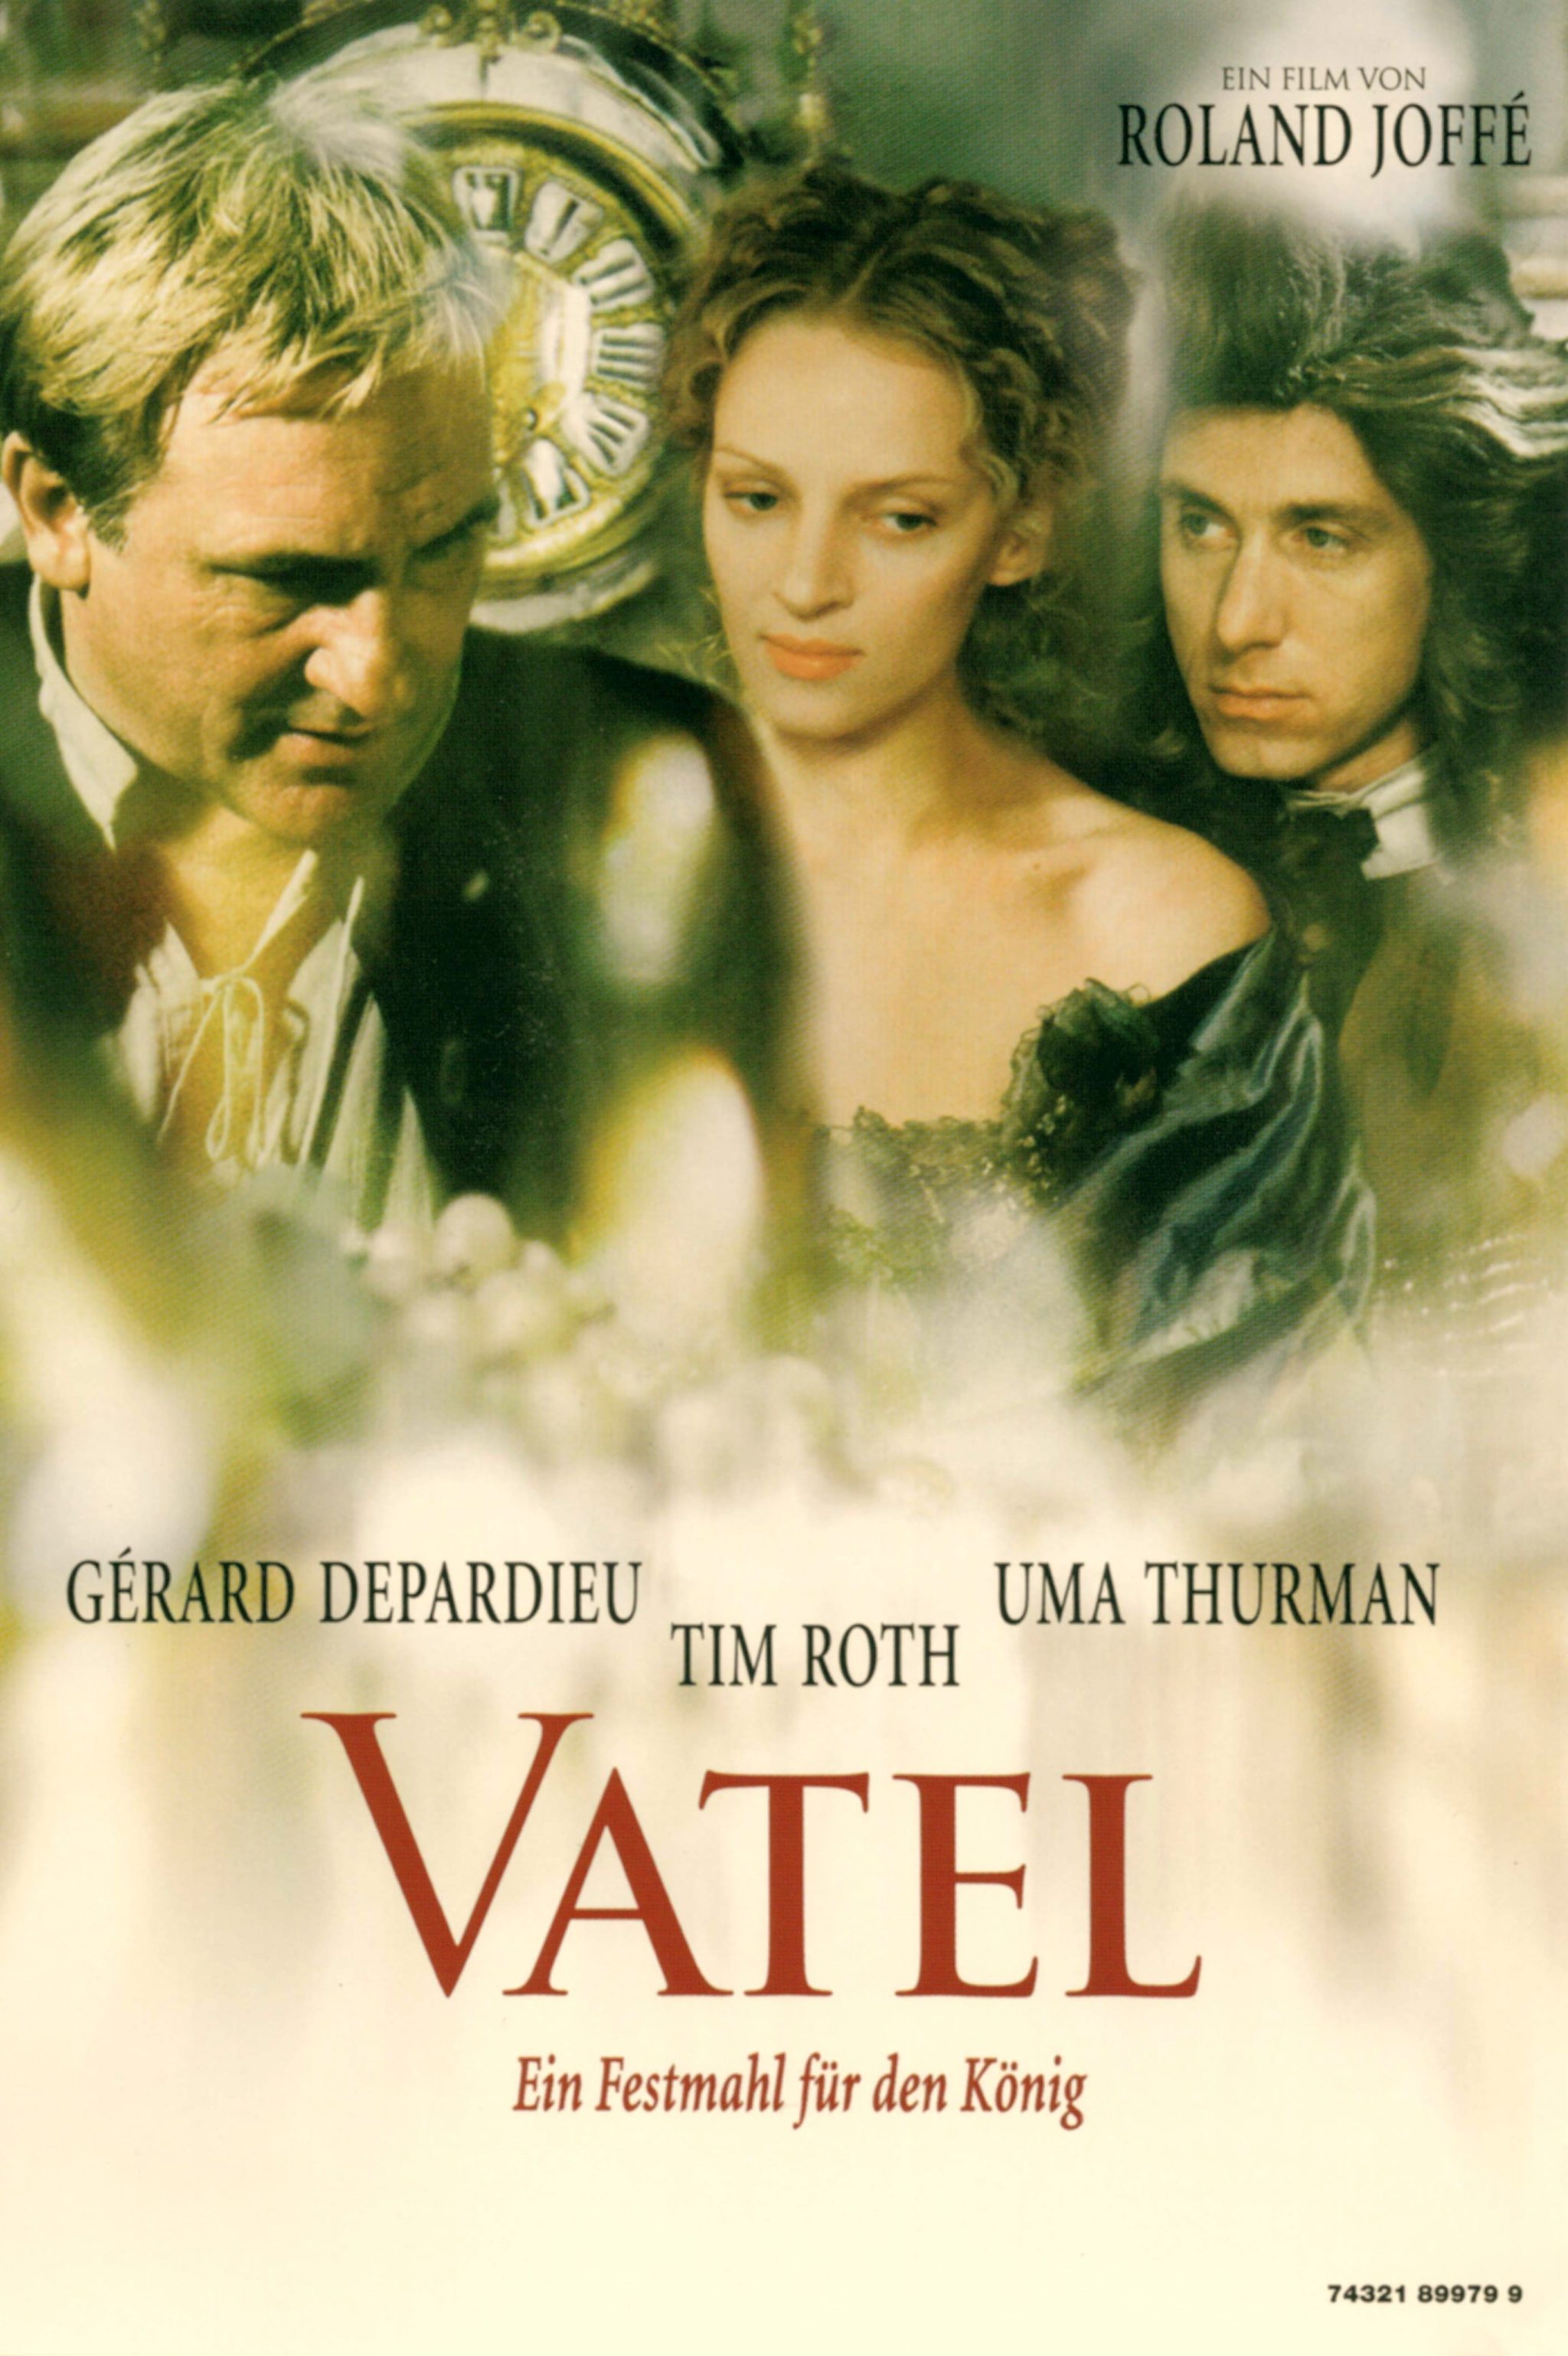 Plakat von "Vatel"